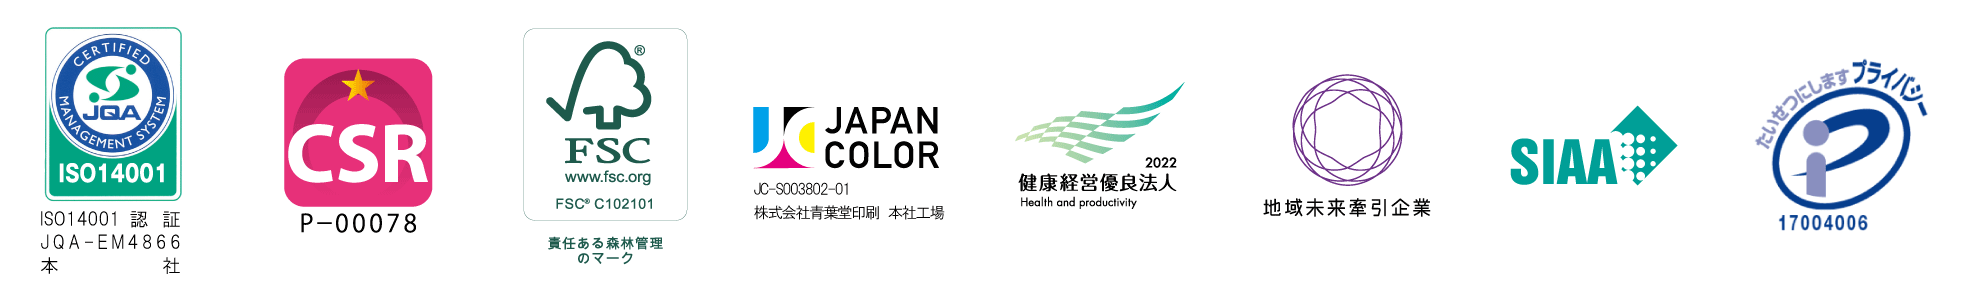 ISO14001 / CSR / FSC / JAPAN COLOR / 健康経営優良法人 / 地域未来牽引企業 / SIAA / Pマーク